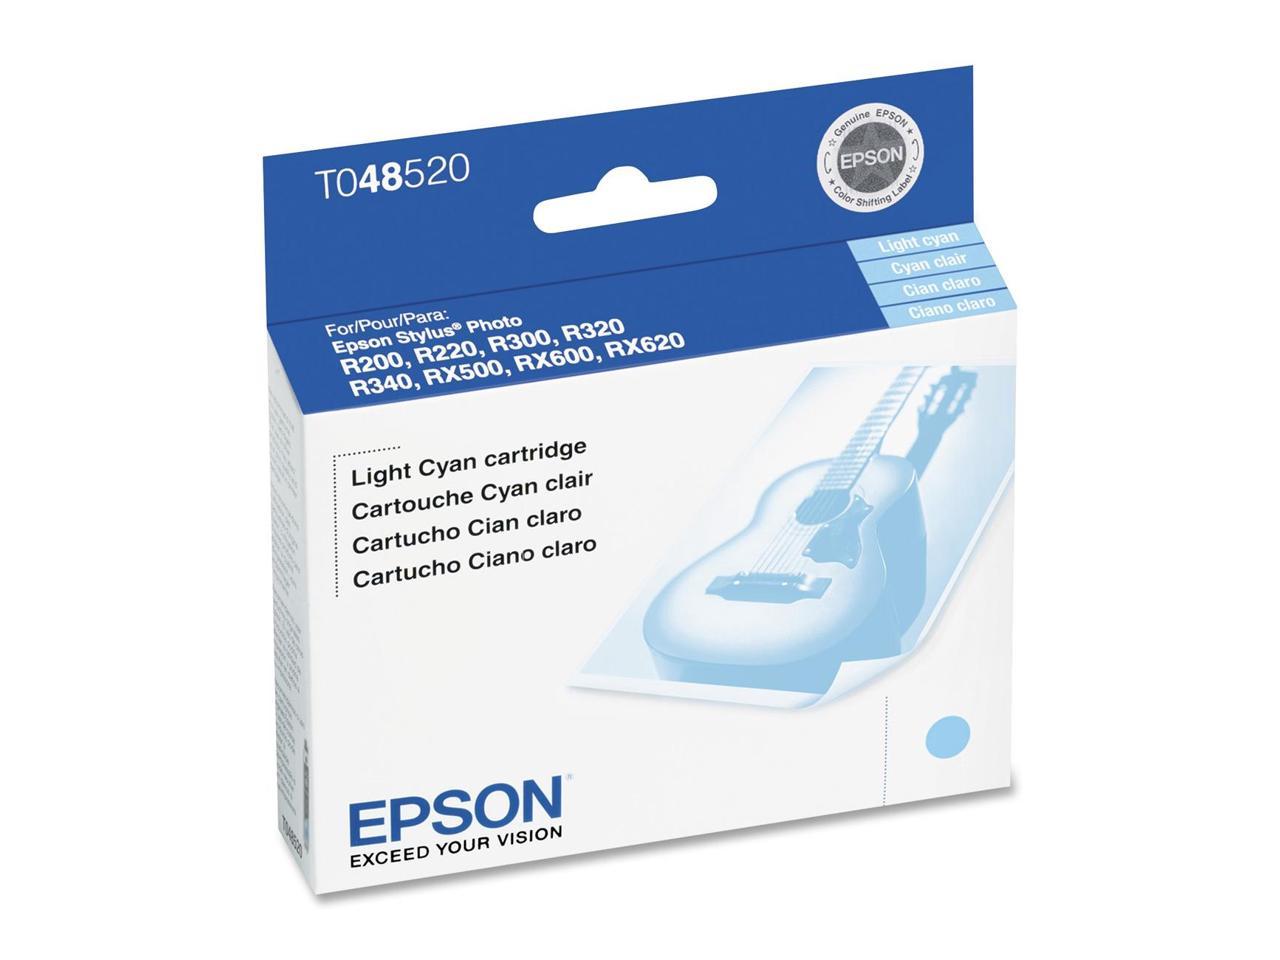 EPSON T048520 Photo Cartridge Light Cyan